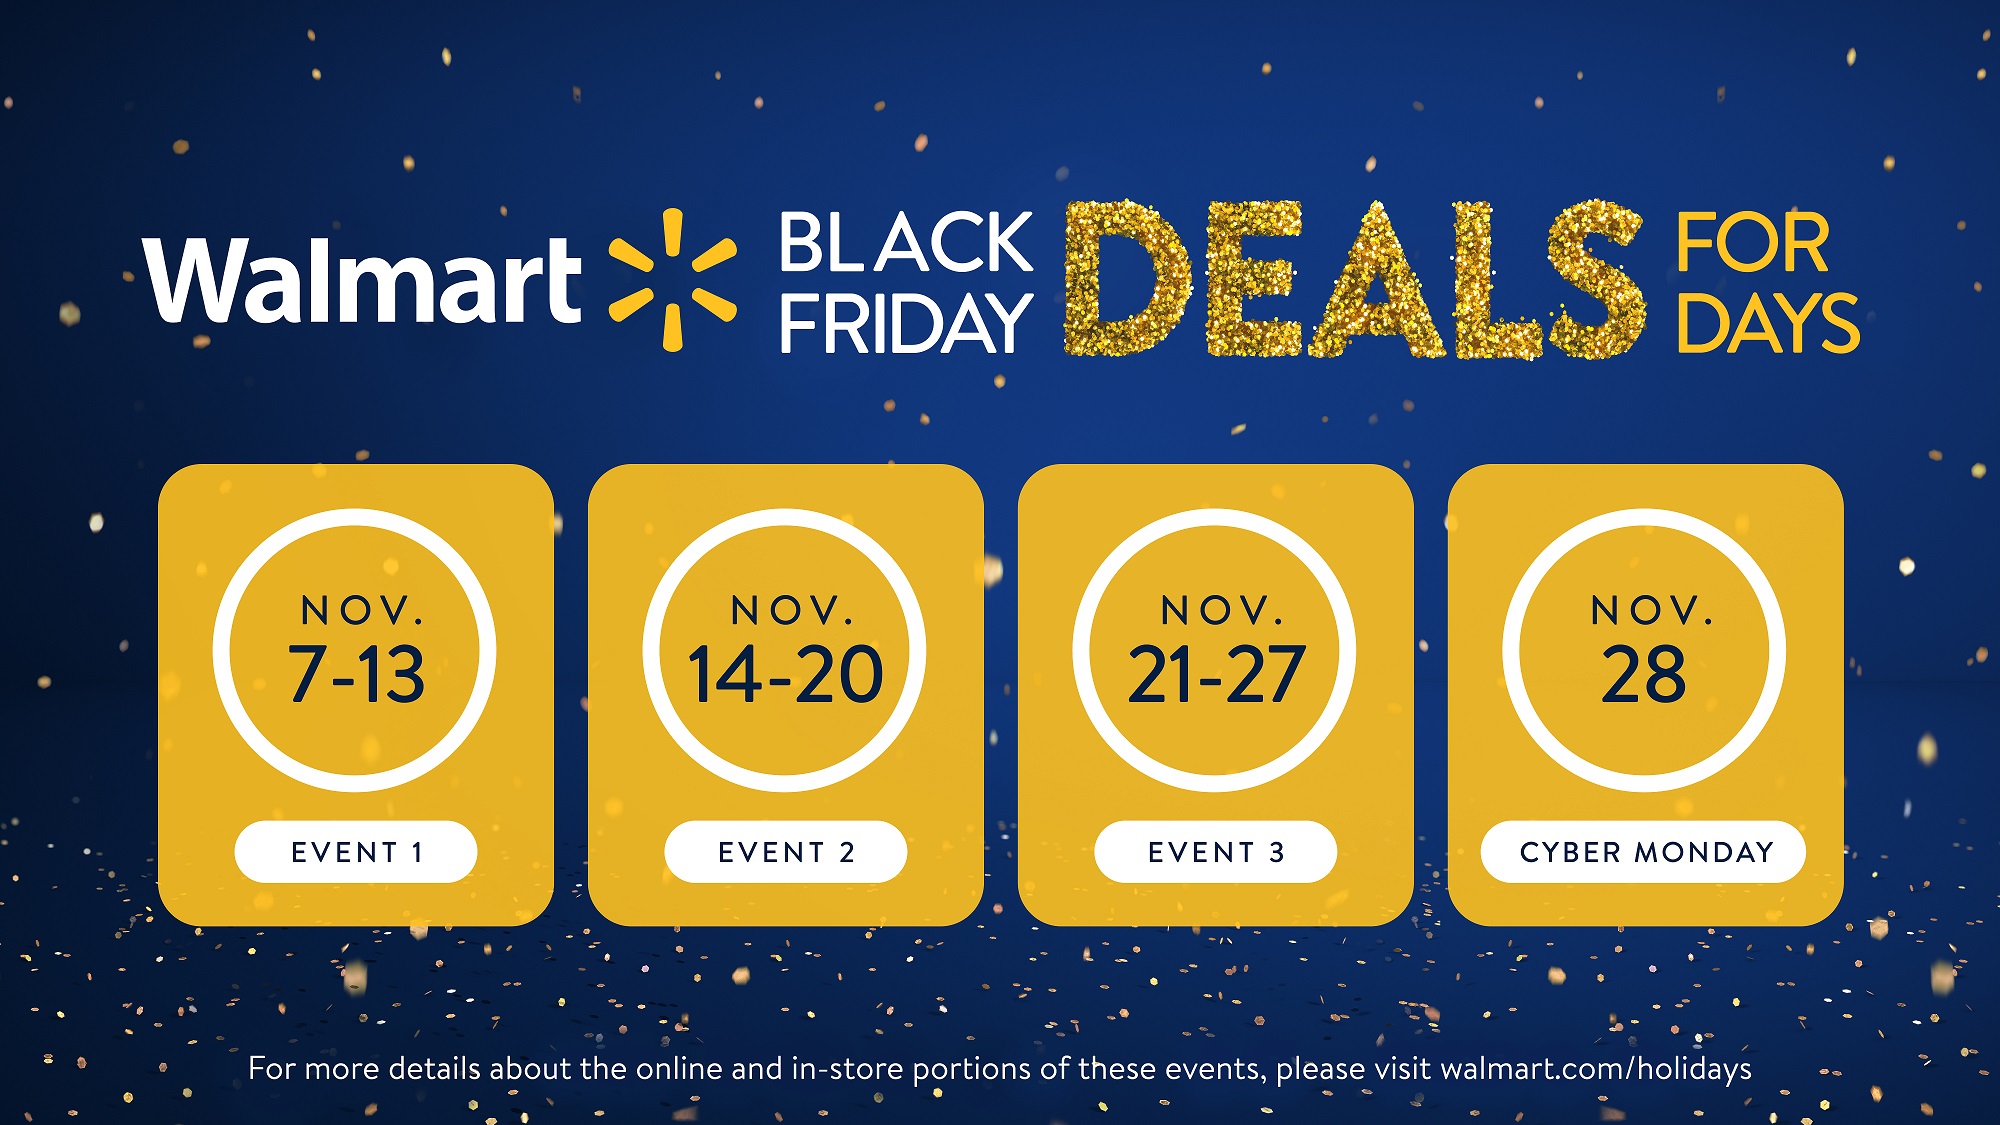 Walmart Black Friday Deals for Days date information